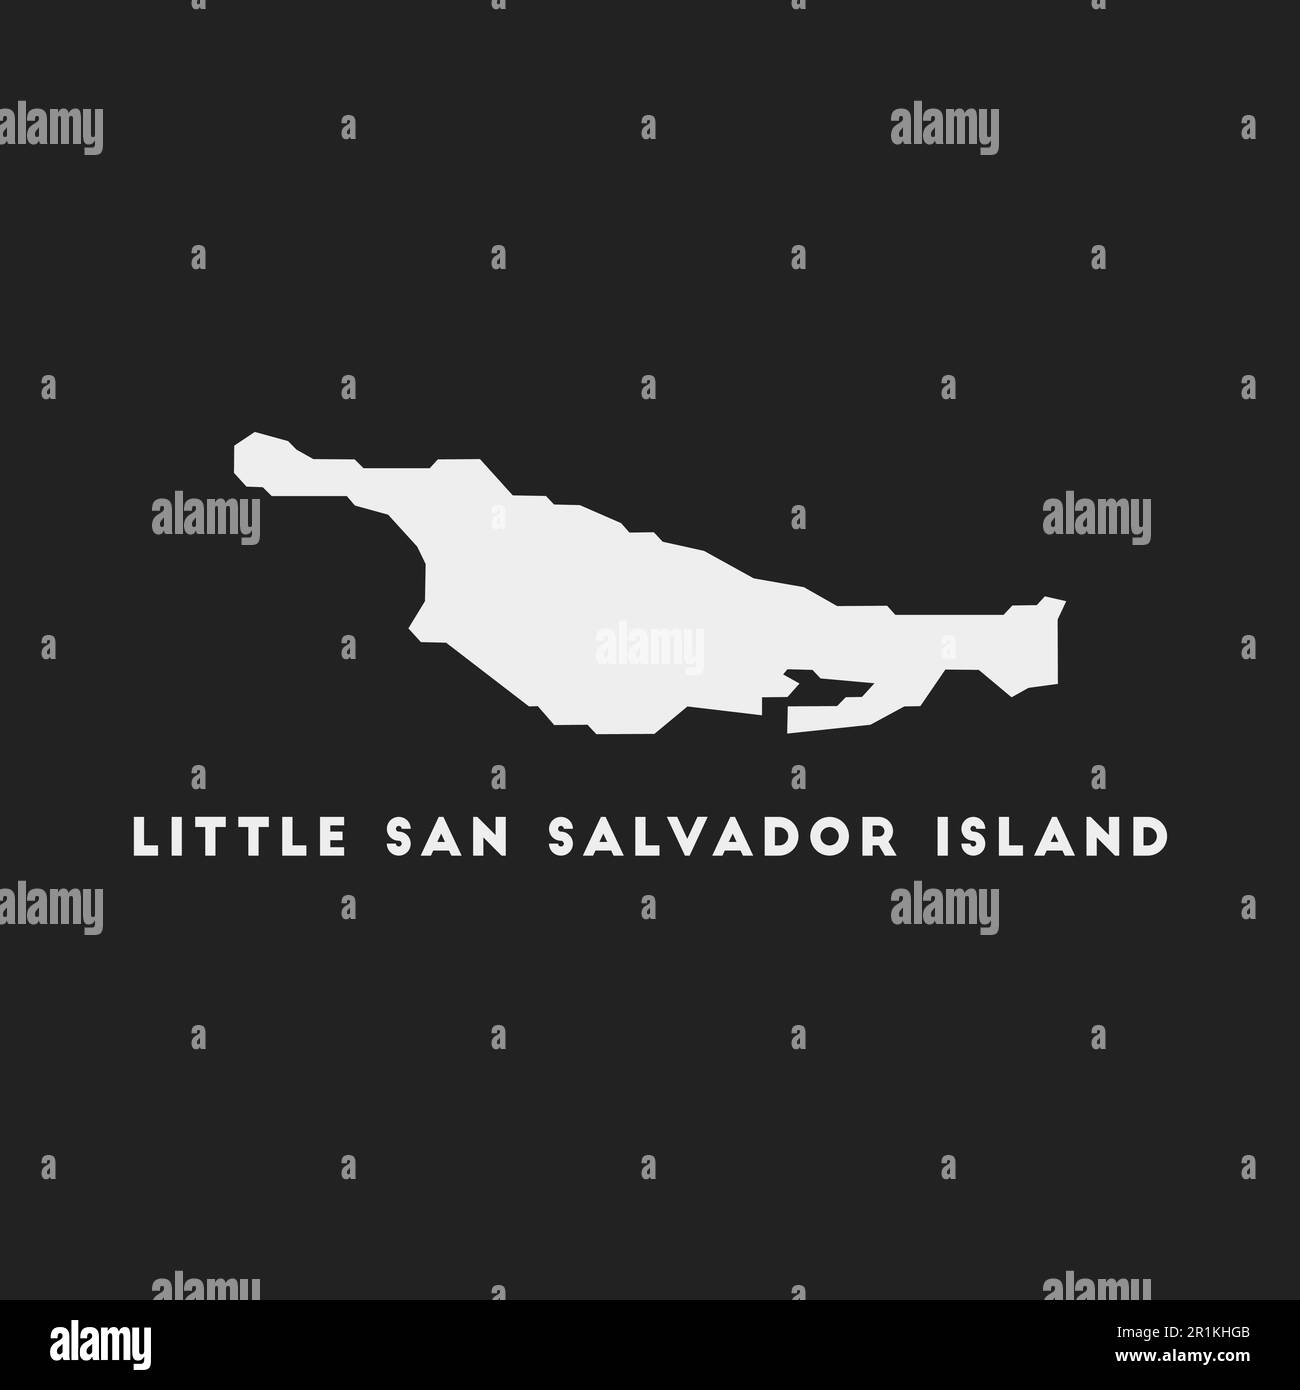 Little San Salvador Island icon. Map on dark background. Stylish Little San Salvador Island map with name. Vector illustration. Stock Vector